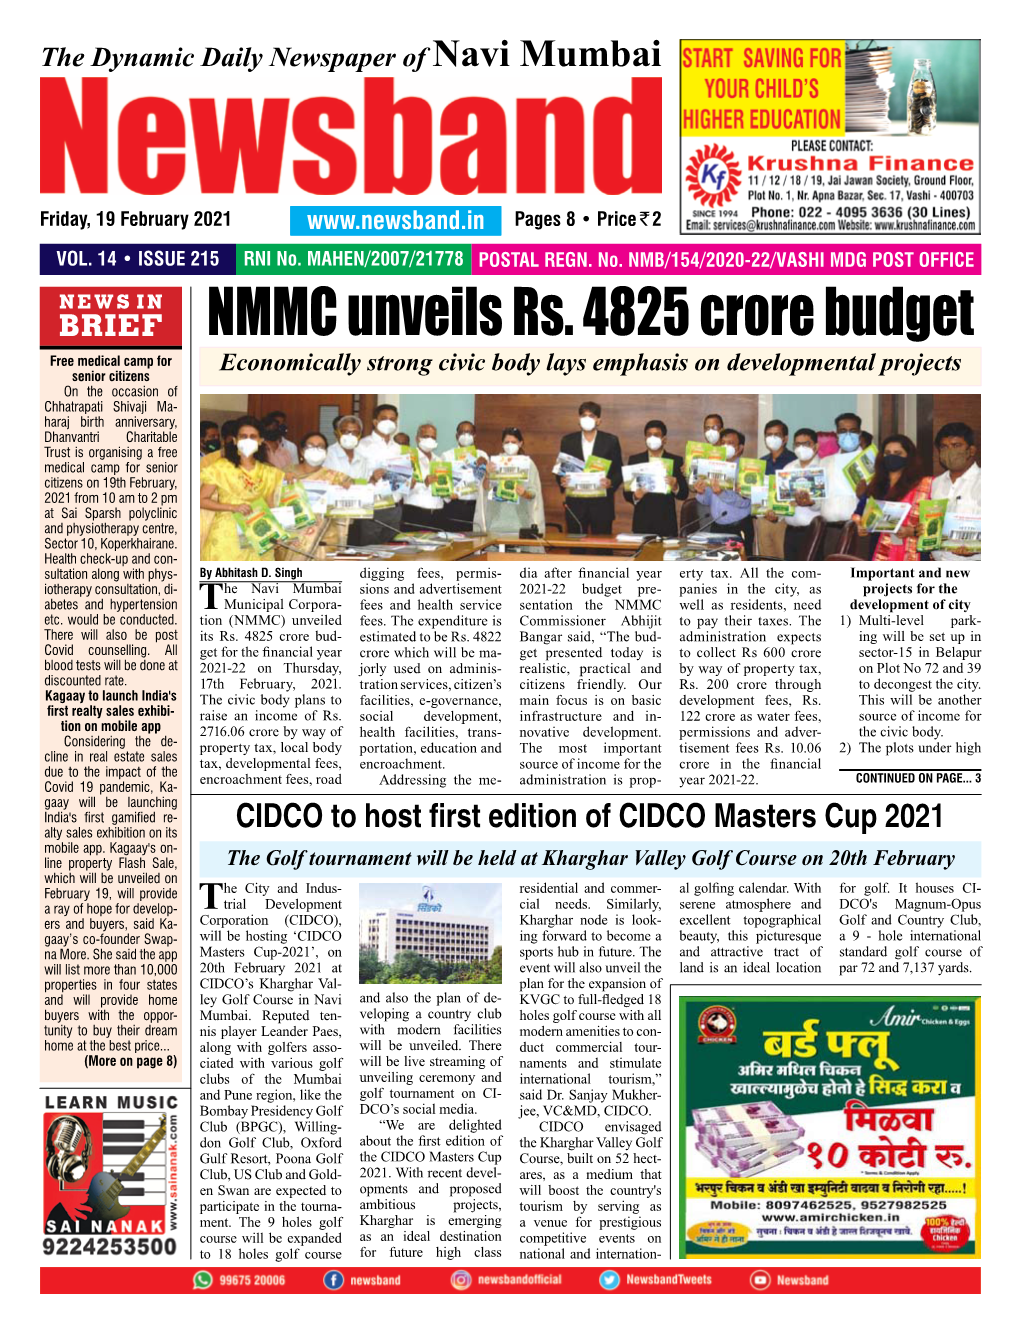 NMMC Unveils Rs. 4825 Crore Budget